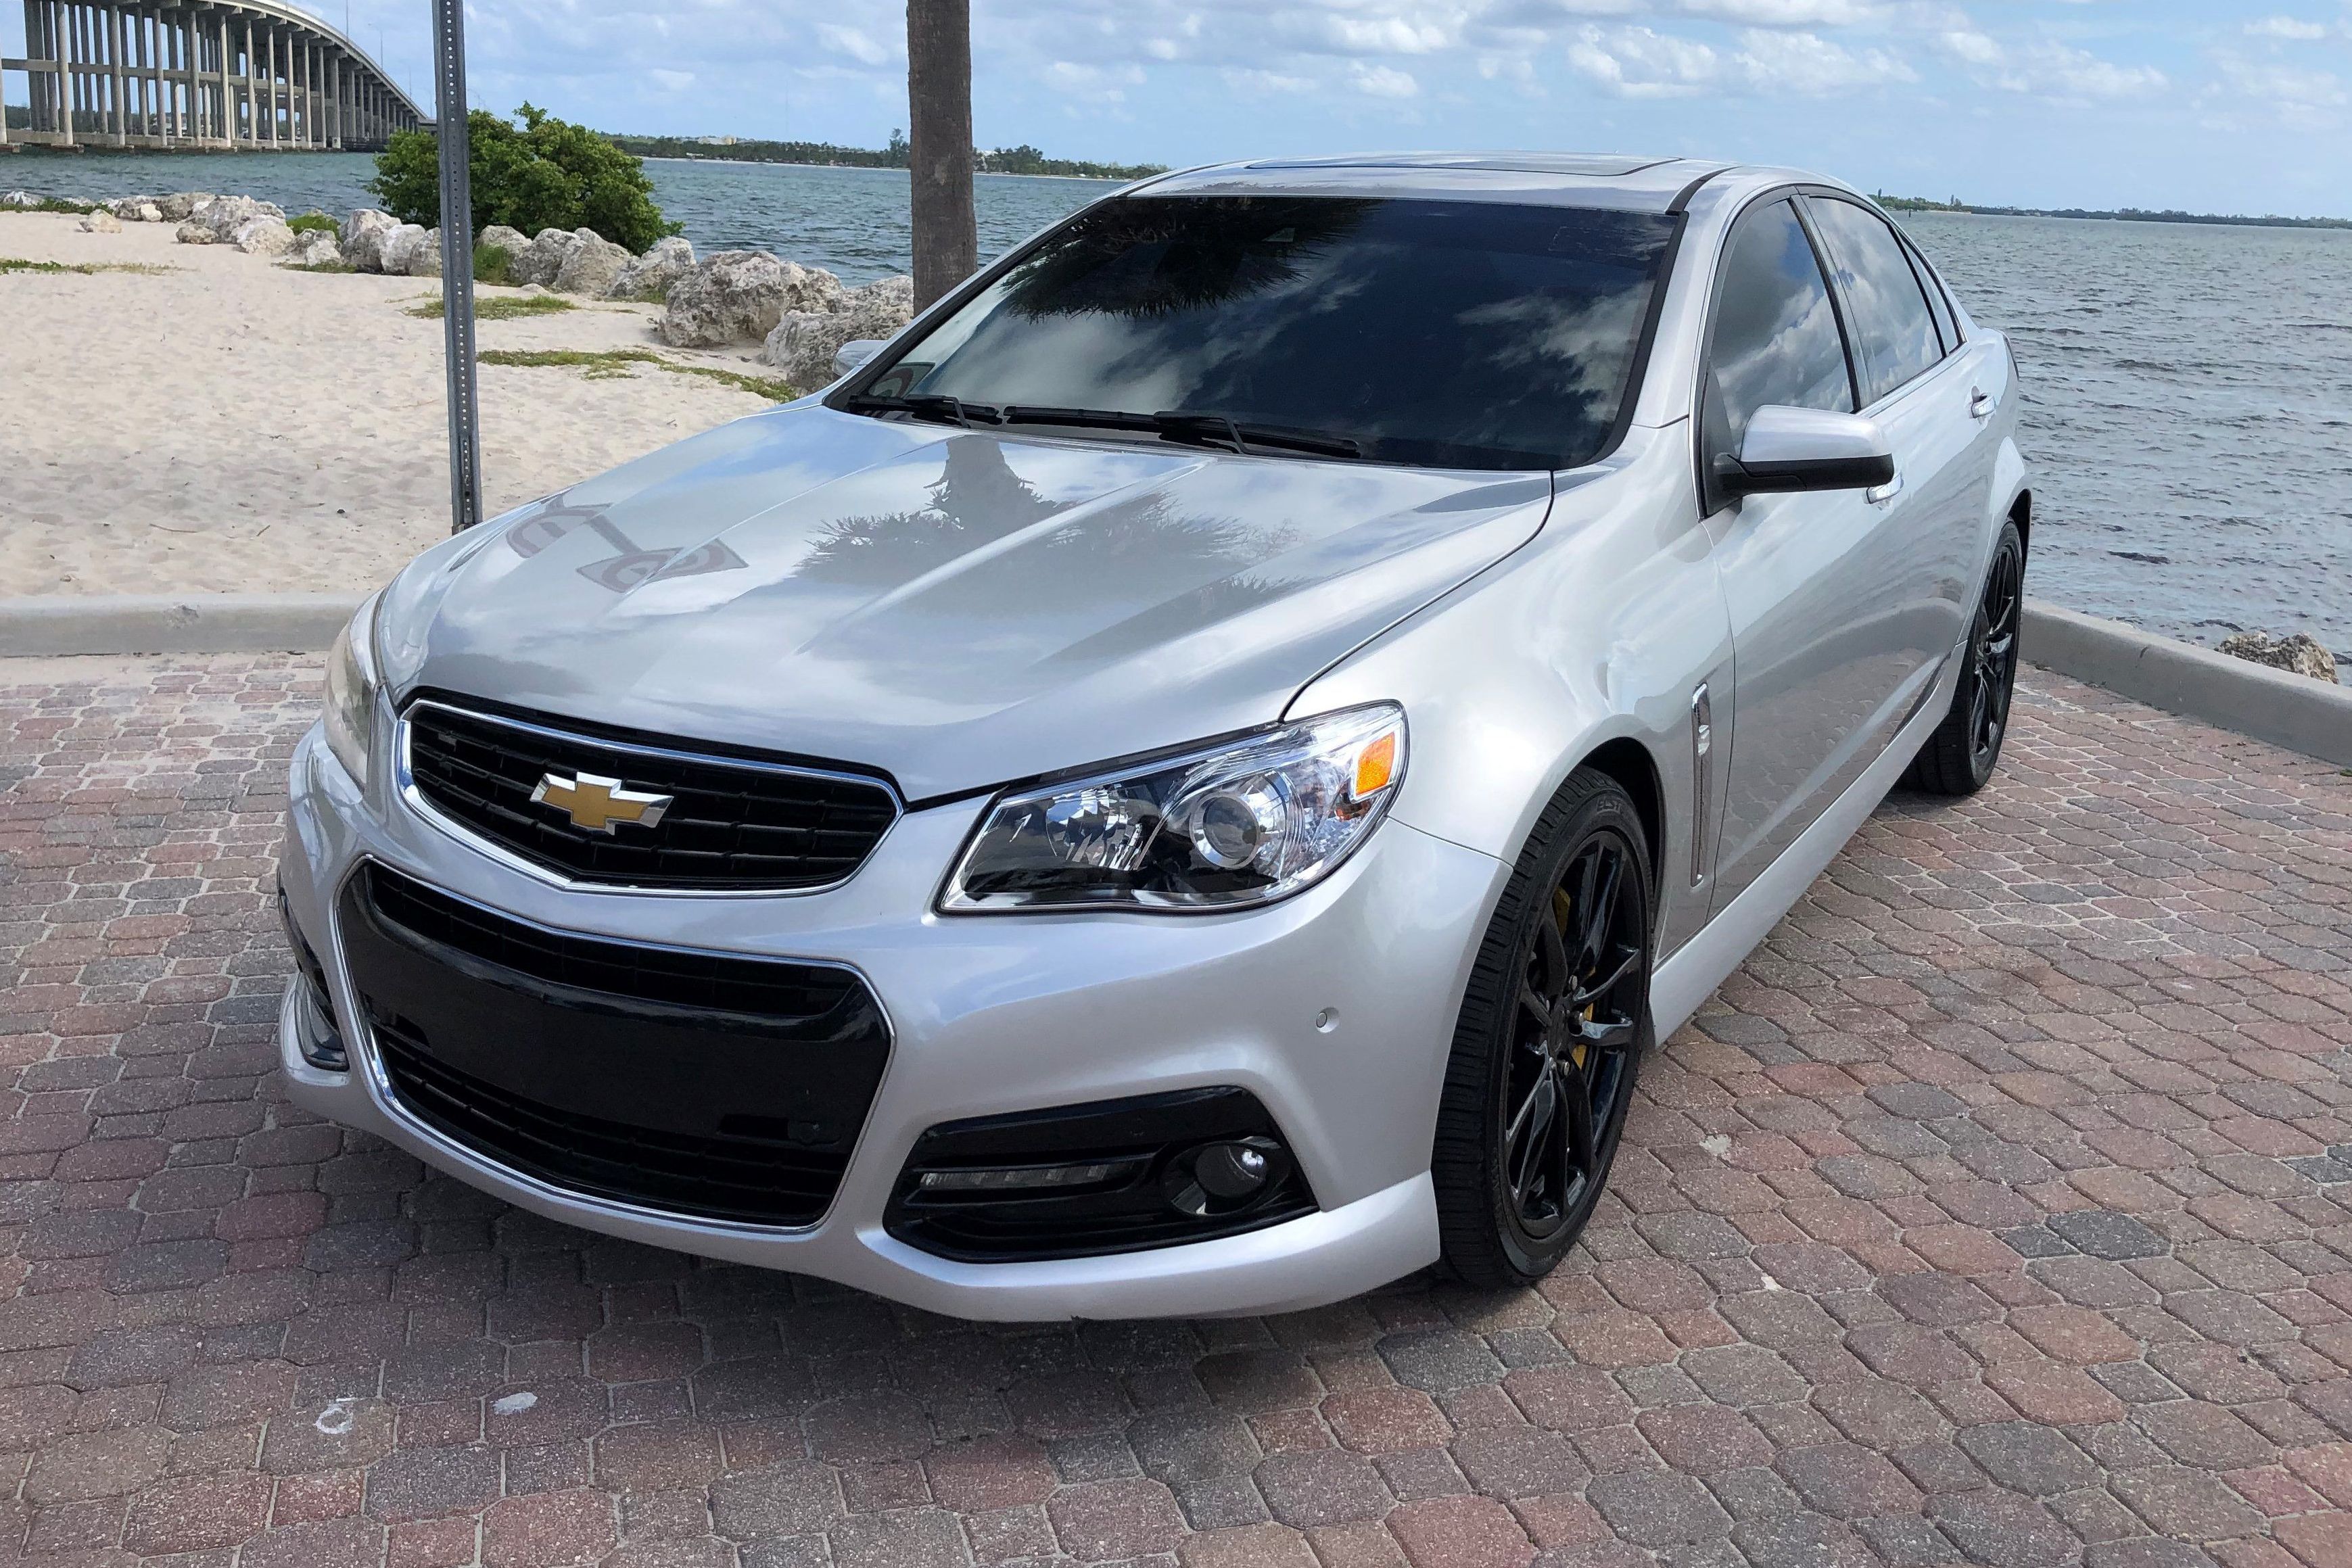 2014 Chevrolet Ss Miami, Florida | Hemmings.com